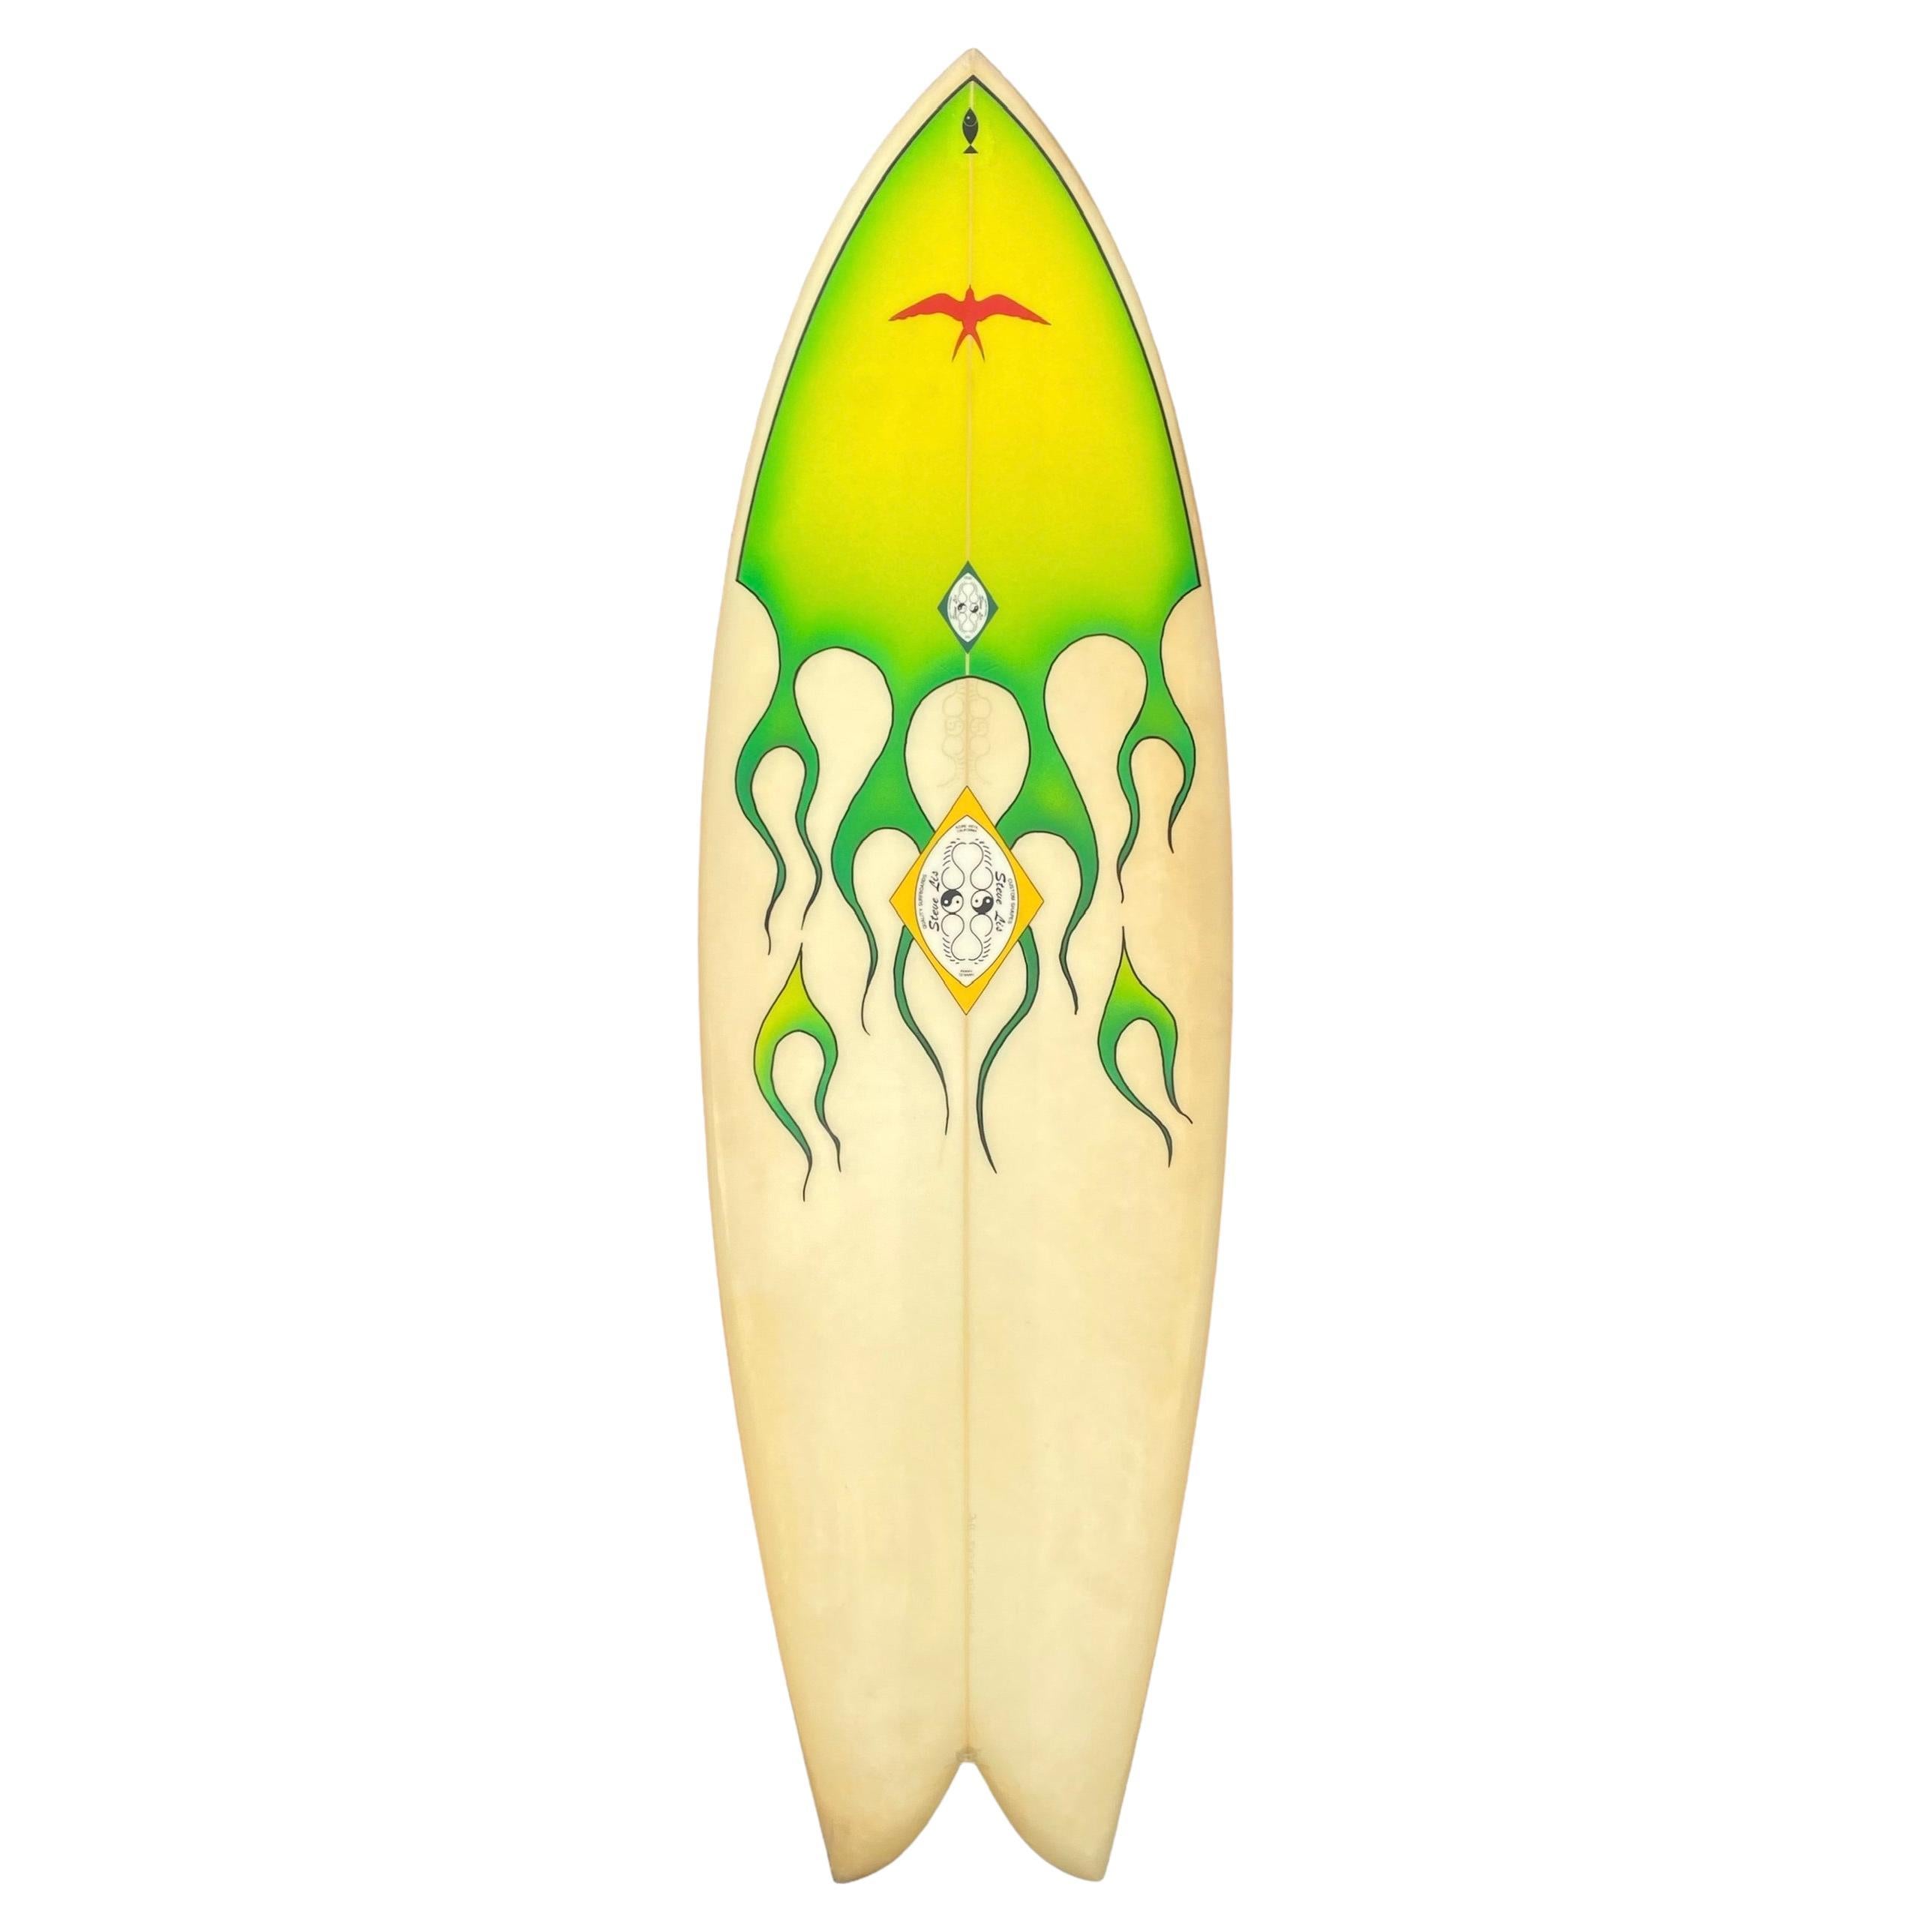 Steve Lis shaped ‘Flaming’ Fish surfboard